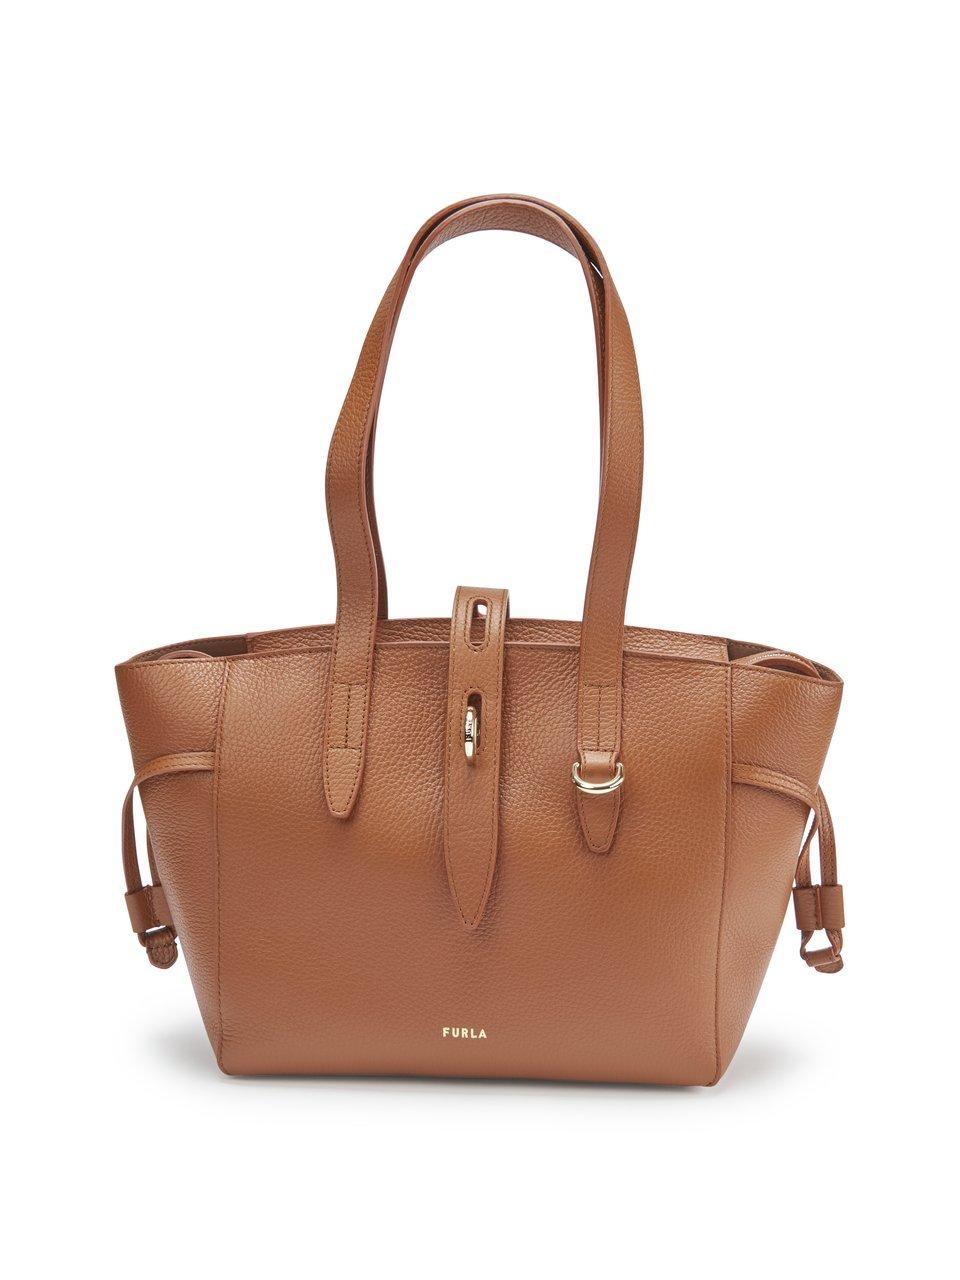 Image of Shopper bag “Net S Tote 24“ Furla brown